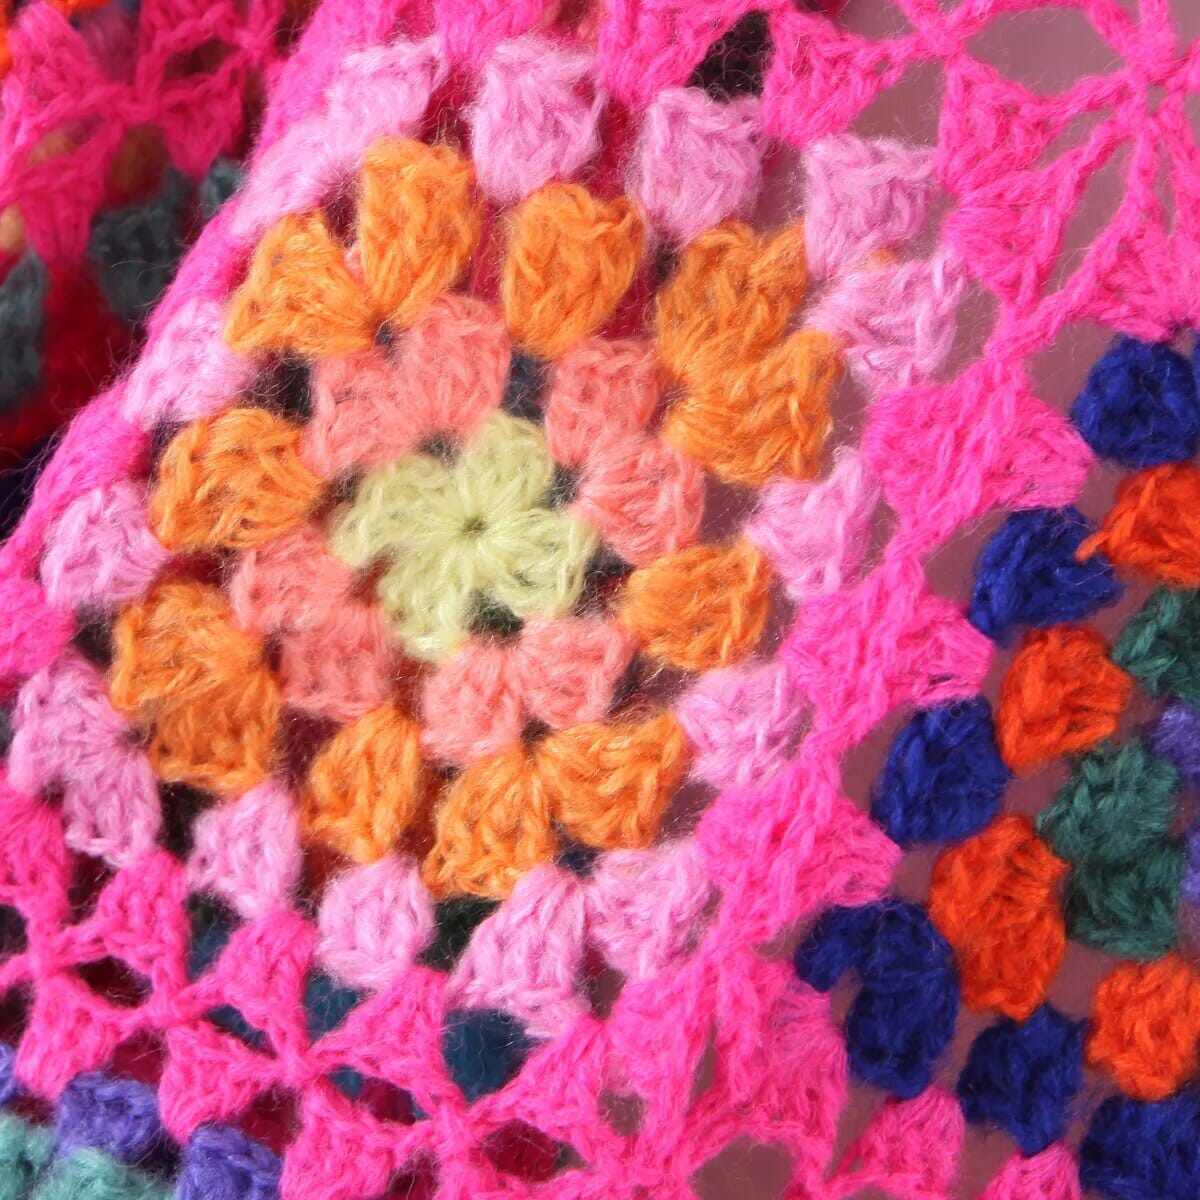 Bohemia Vintage Colored Plaid Flower Granny Square Hand Crochet Hooded Crop Cardigan Coats & Jackets jehouze 